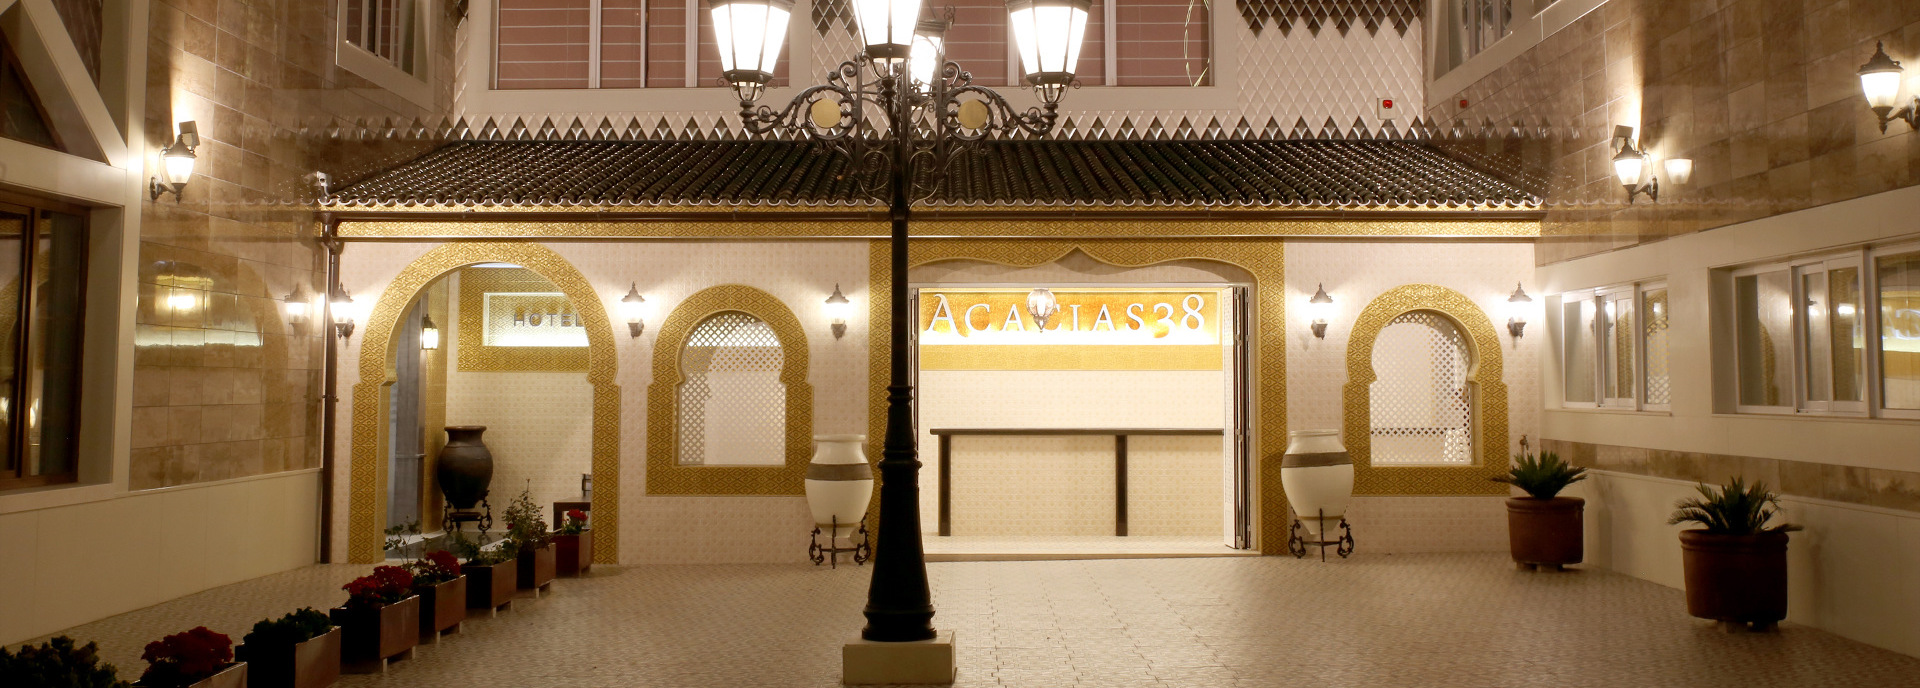 Hotel Las Acacias, Córdoba - Aviso Legal